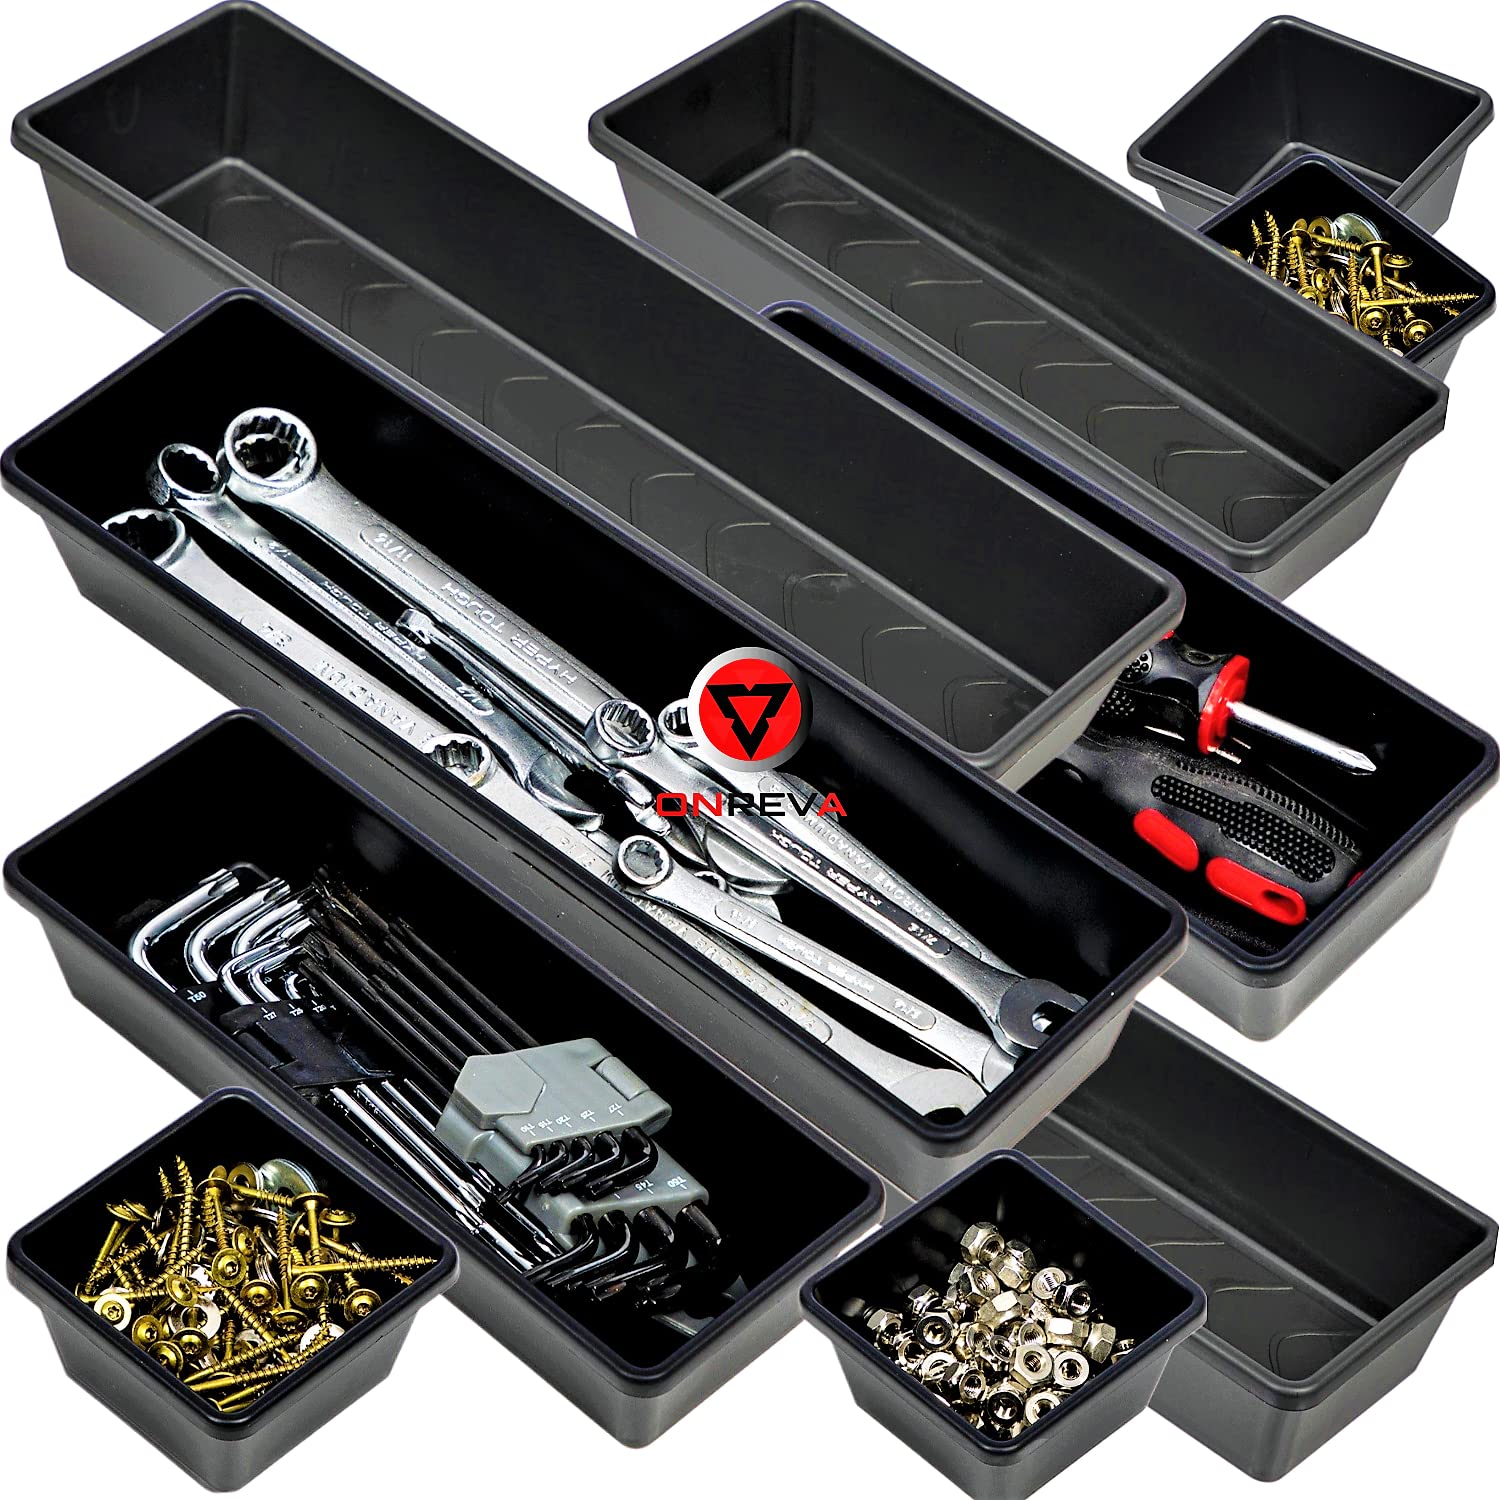 ONREVA Tool Box Organizer Tray Divider Set, Extra Large Toolbox Trays, Tool Box Organizers and Storage Kit, Rolling Tool Chest Drawer Bins, Hardware Screwdrivers Pliers Organization, 6pcs